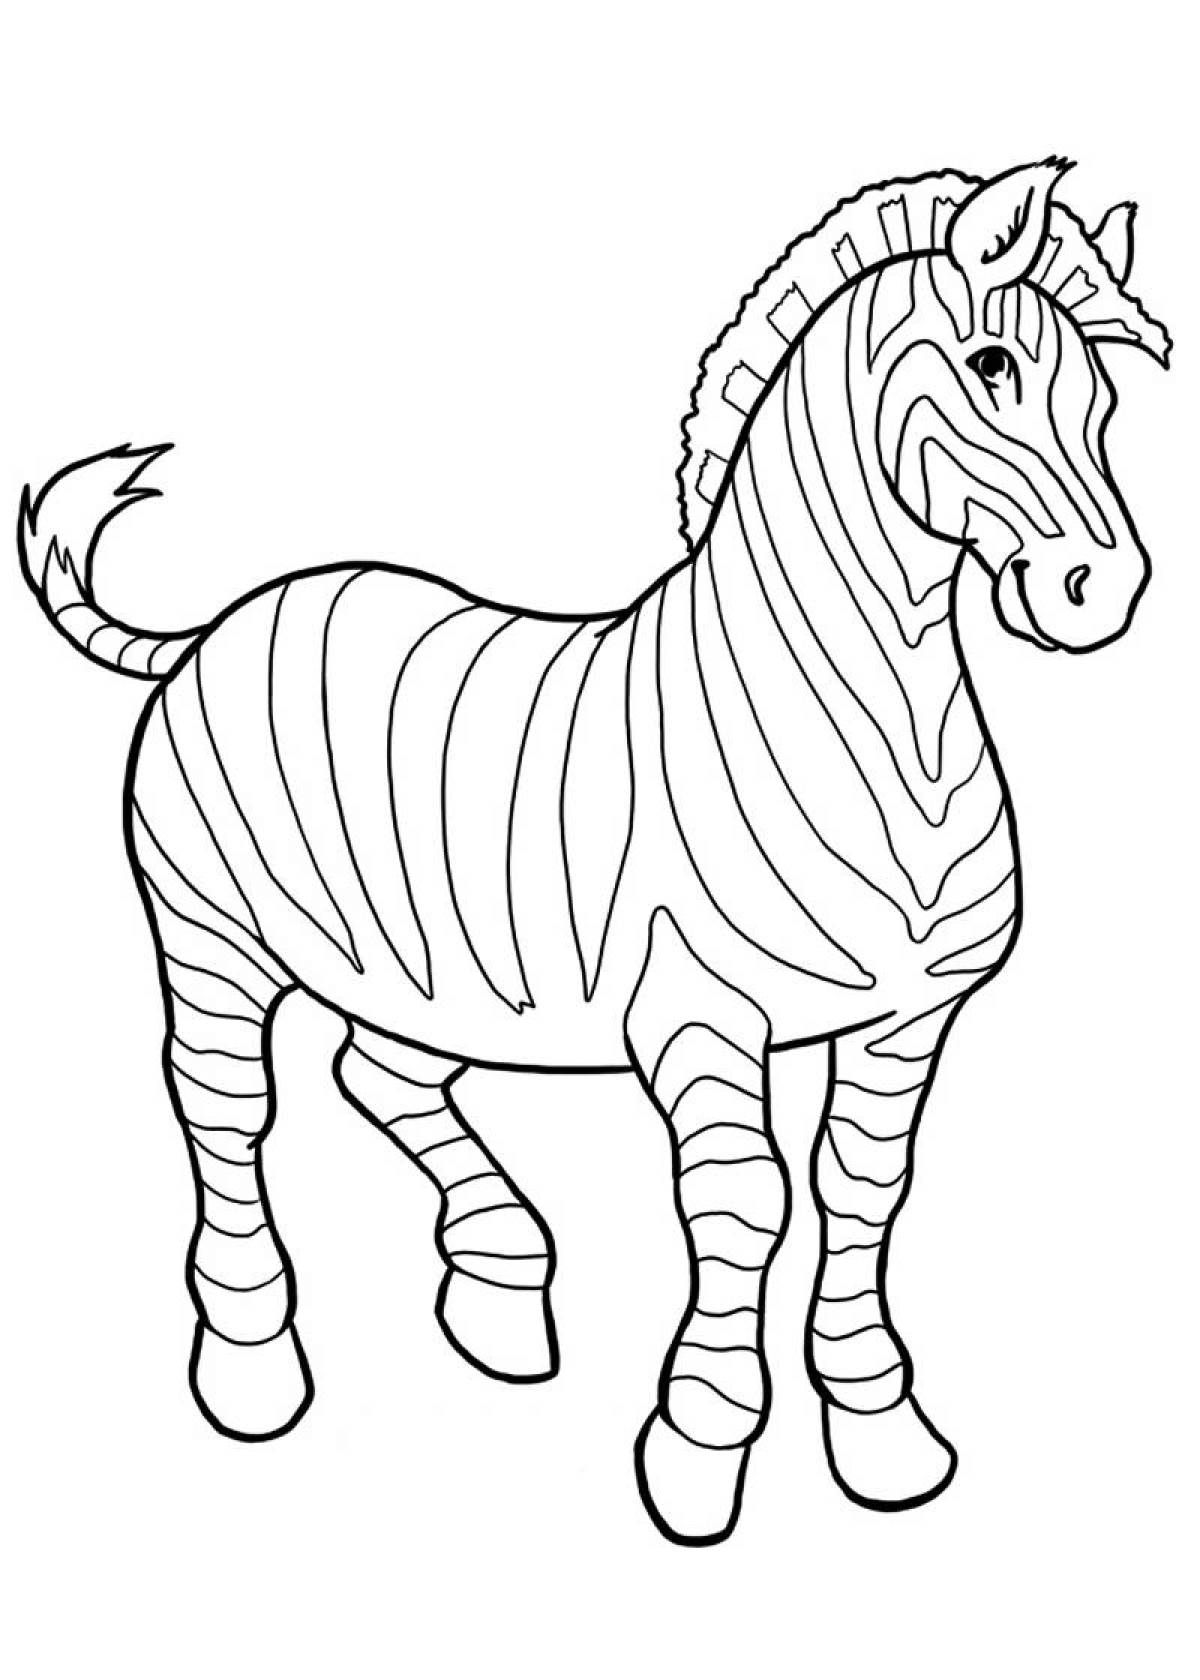 Zebra coloring book for kids